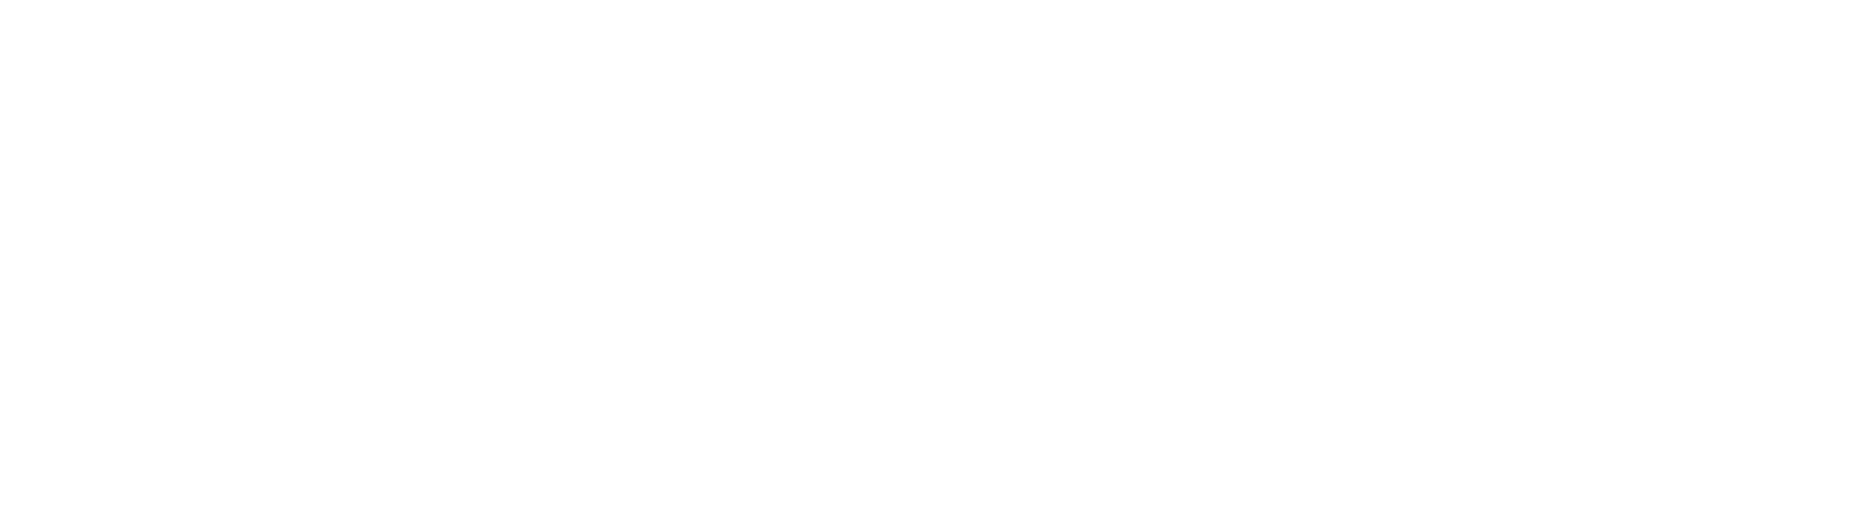 new life assembly of god logo